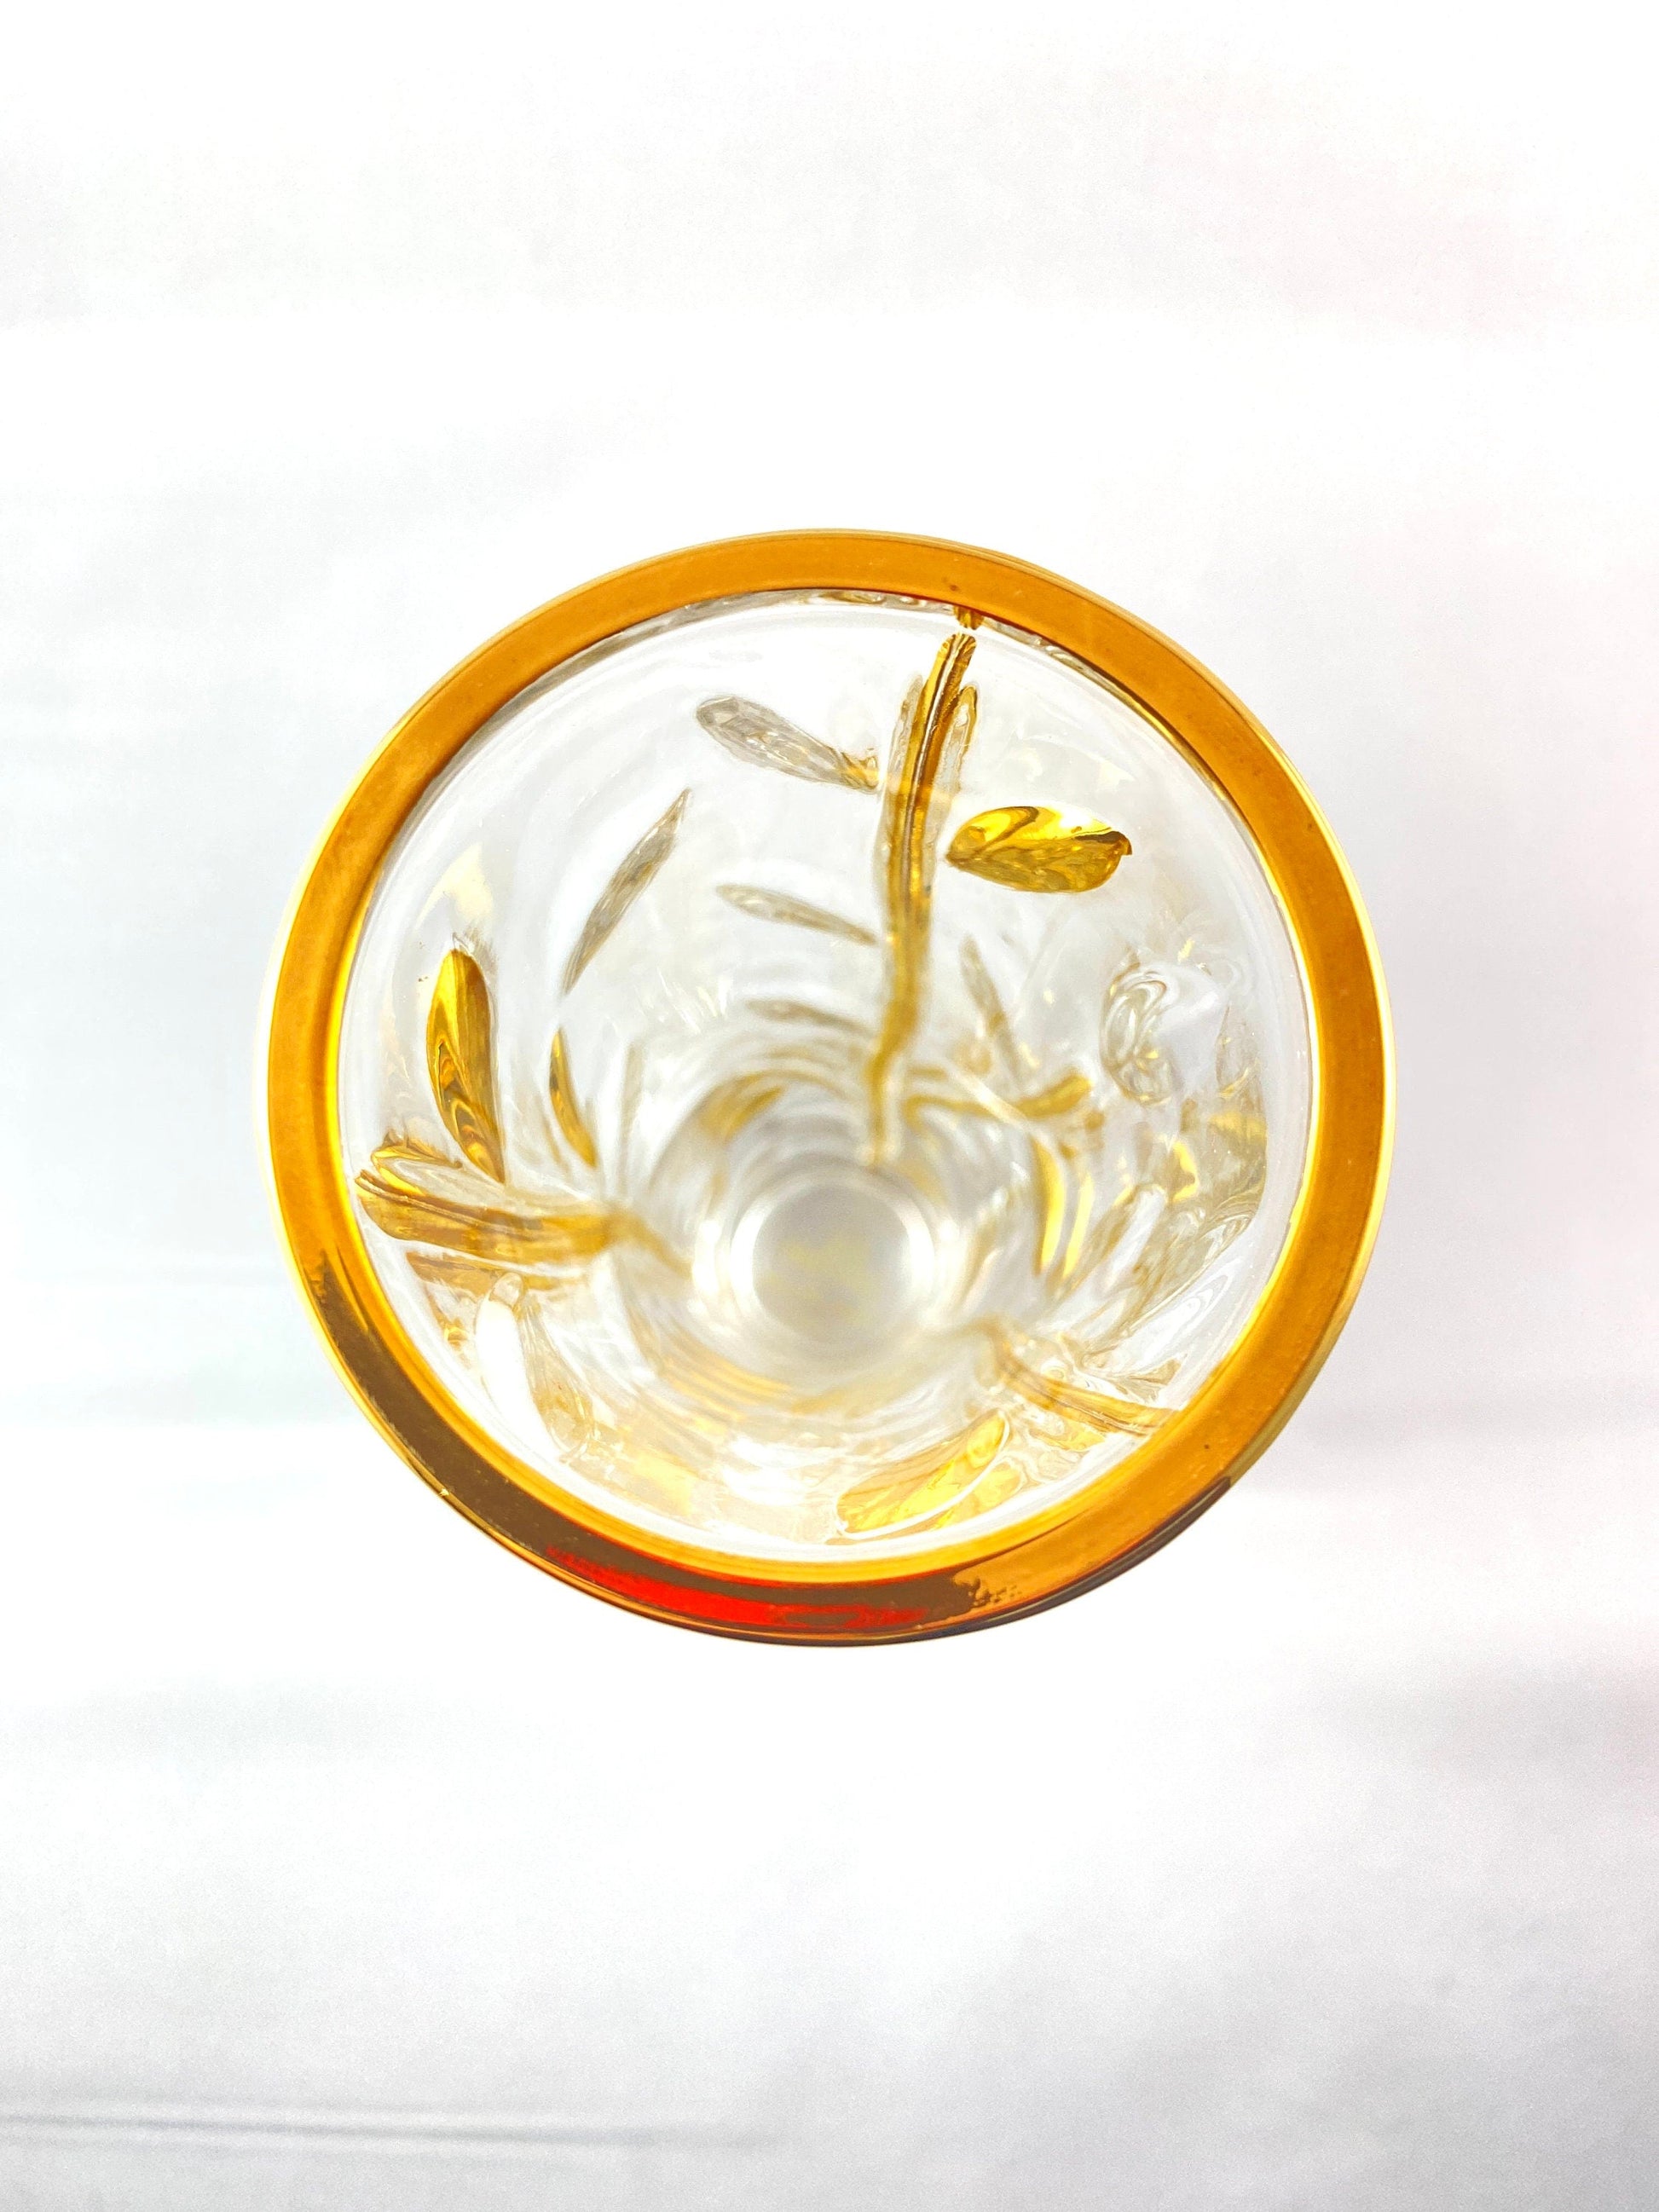 24kt Gold Venetian Glass Tree of Life Flower Vase - Handmade in Italy, Colorful Murano Glass